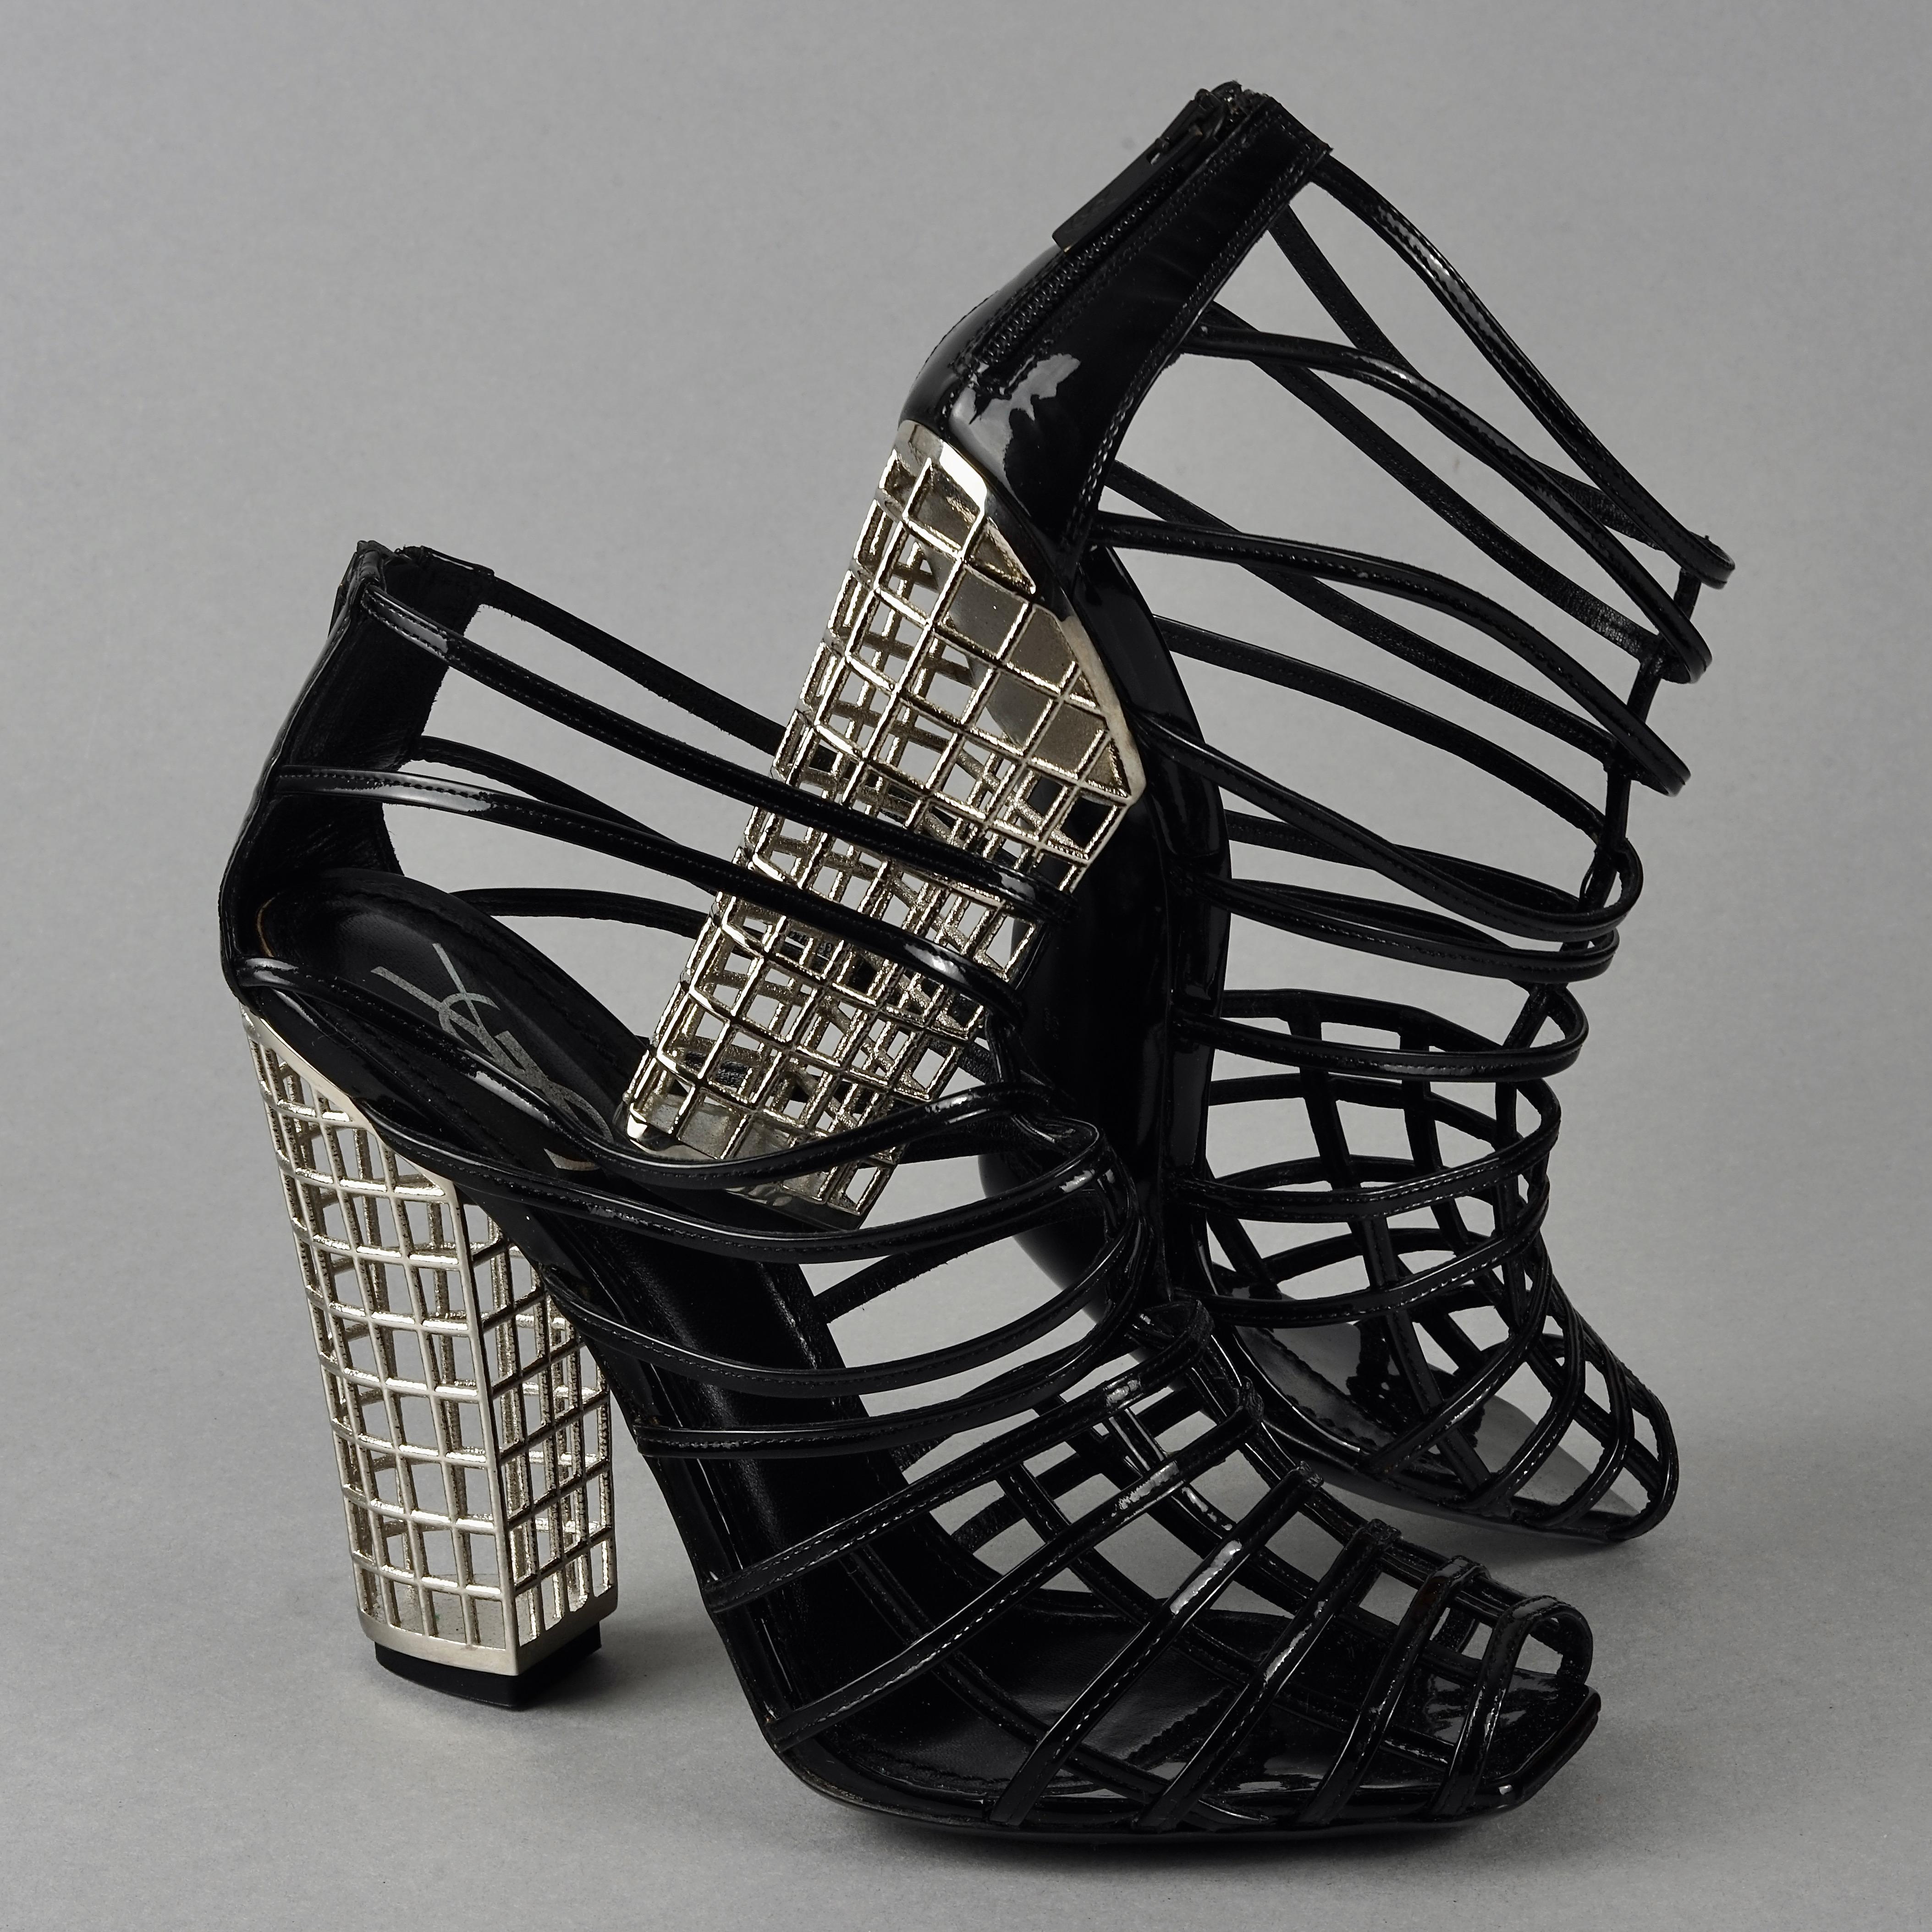 S/S2009 YVES SAINT LAURENT Ysl Cage Heel Ankle Boots

pointure 38 cm hauteur talon 11,5 cm
Measurements:
Size: 38 EU
Heel: 4.5 inches (11.5 cm)

Features:
- 100% Authentic YVES SAINT LAURENT.
- Black patent strappy ankle boots with metal cage heels